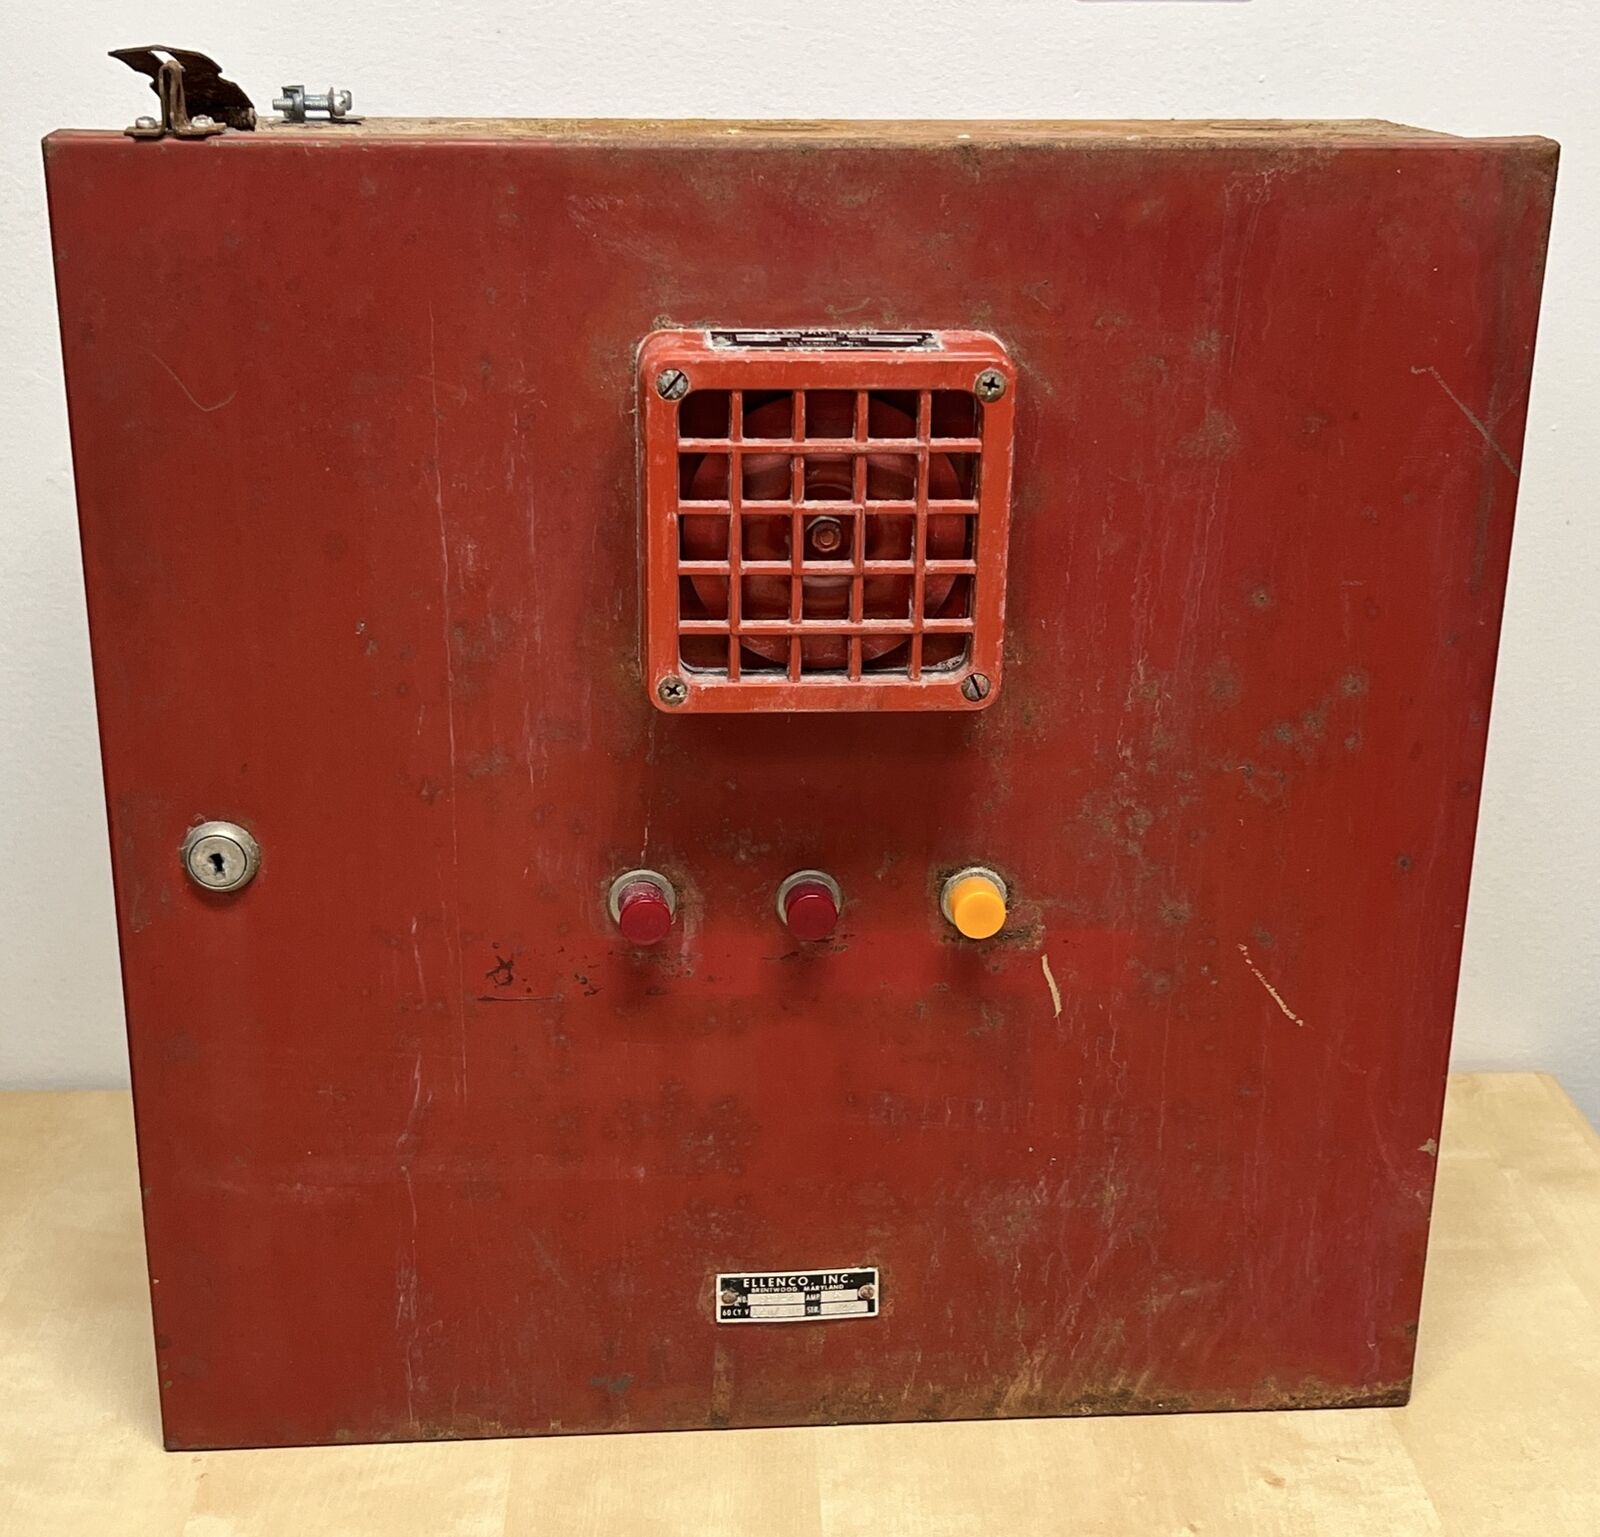 Ellenco SPR-2 Sprinkler Supervisory Panel 250 Mechanical Horn Vintage Fire Alarm